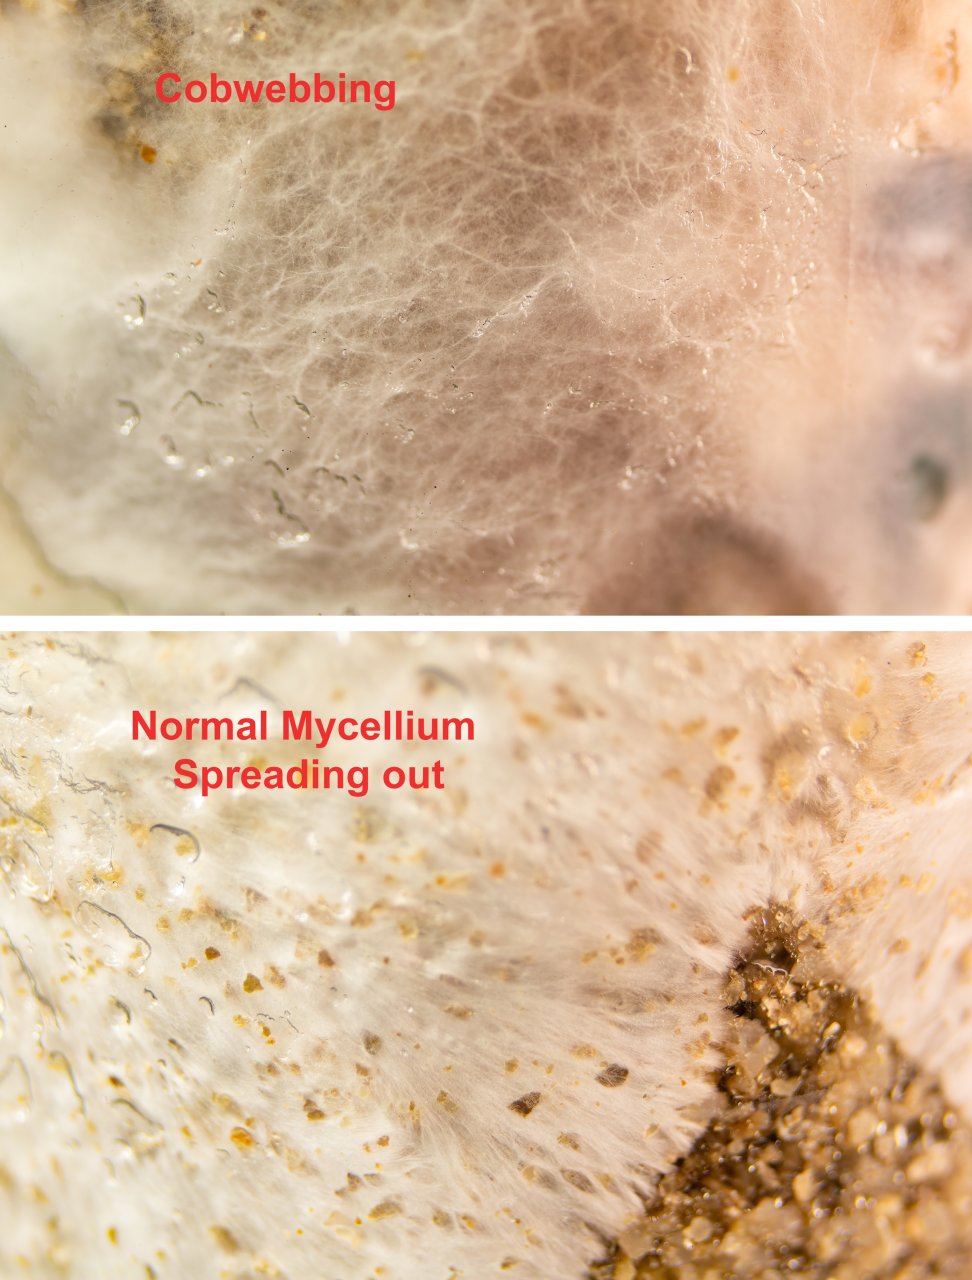 Cobwebbing Mold vs Mycelium Growth.jpg